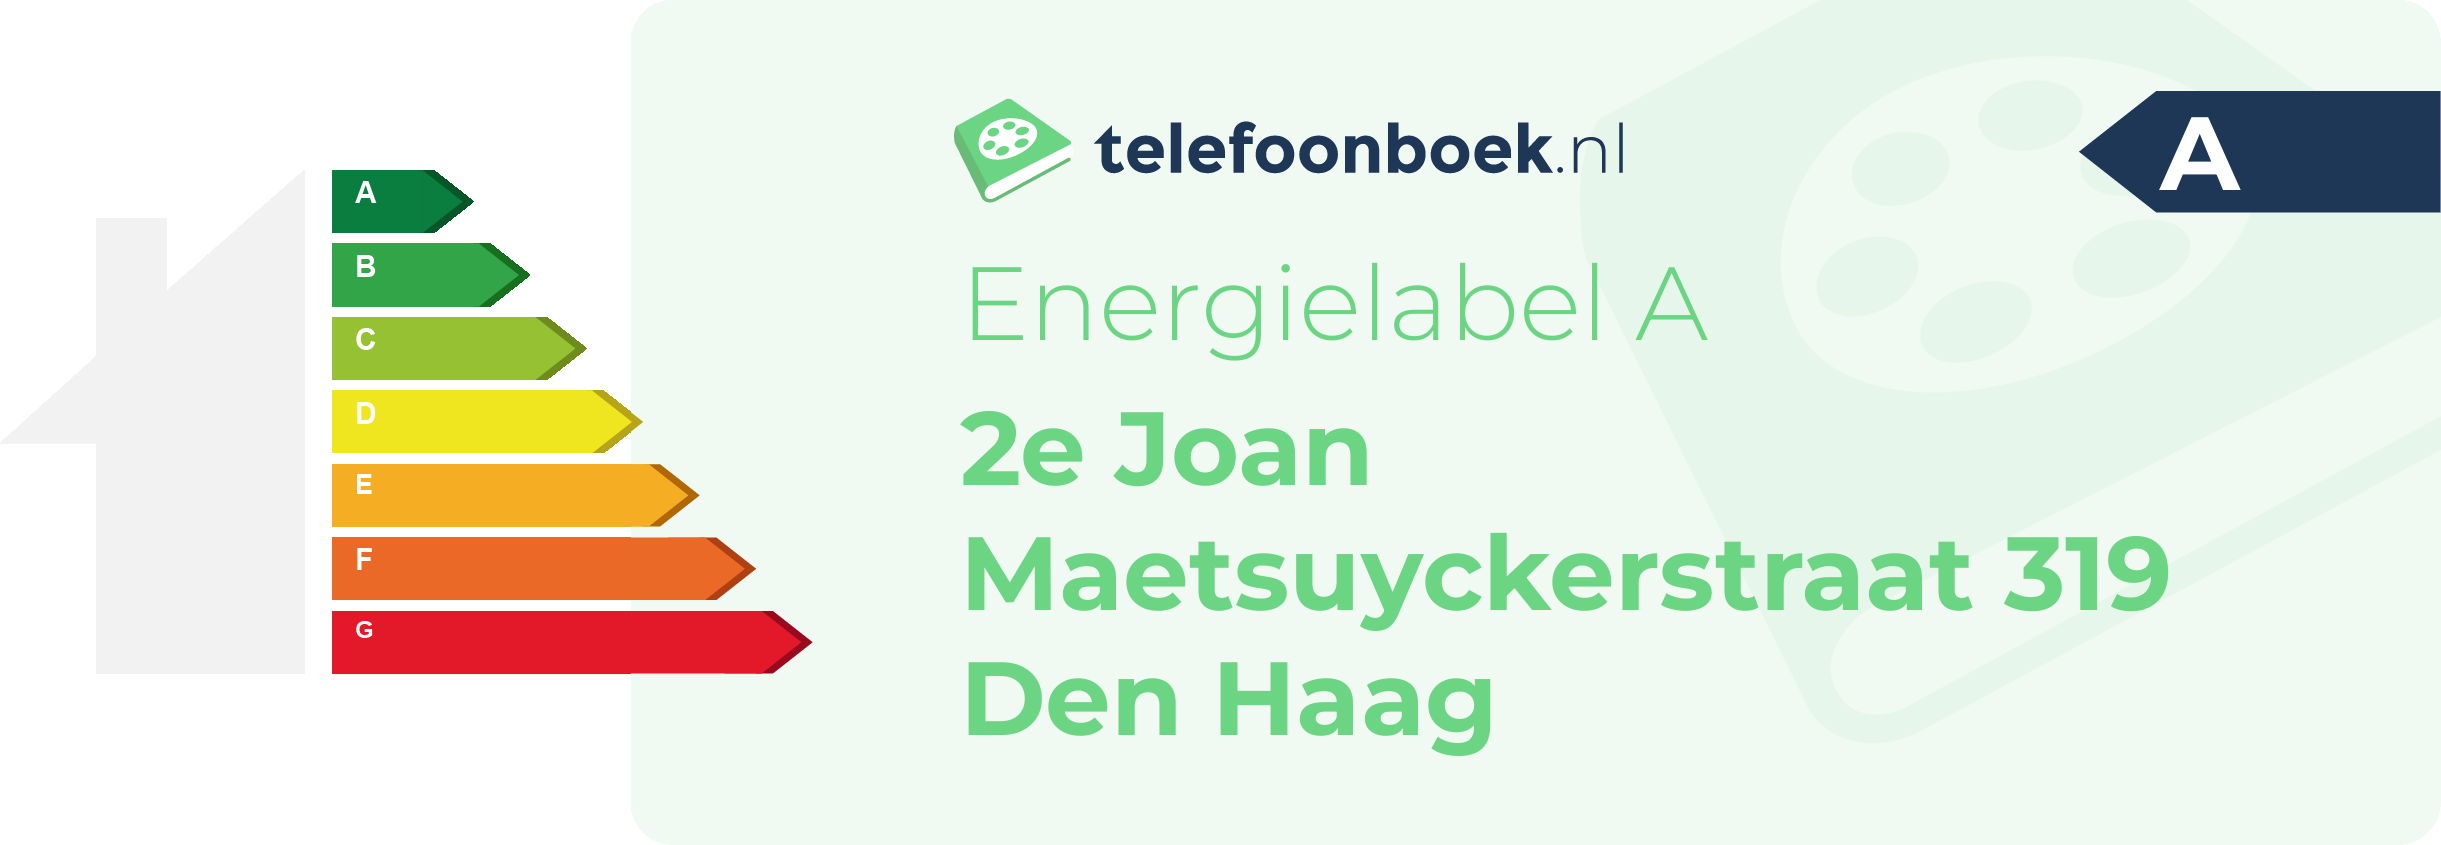 Energielabel 2e Joan Maetsuyckerstraat 319 Den Haag